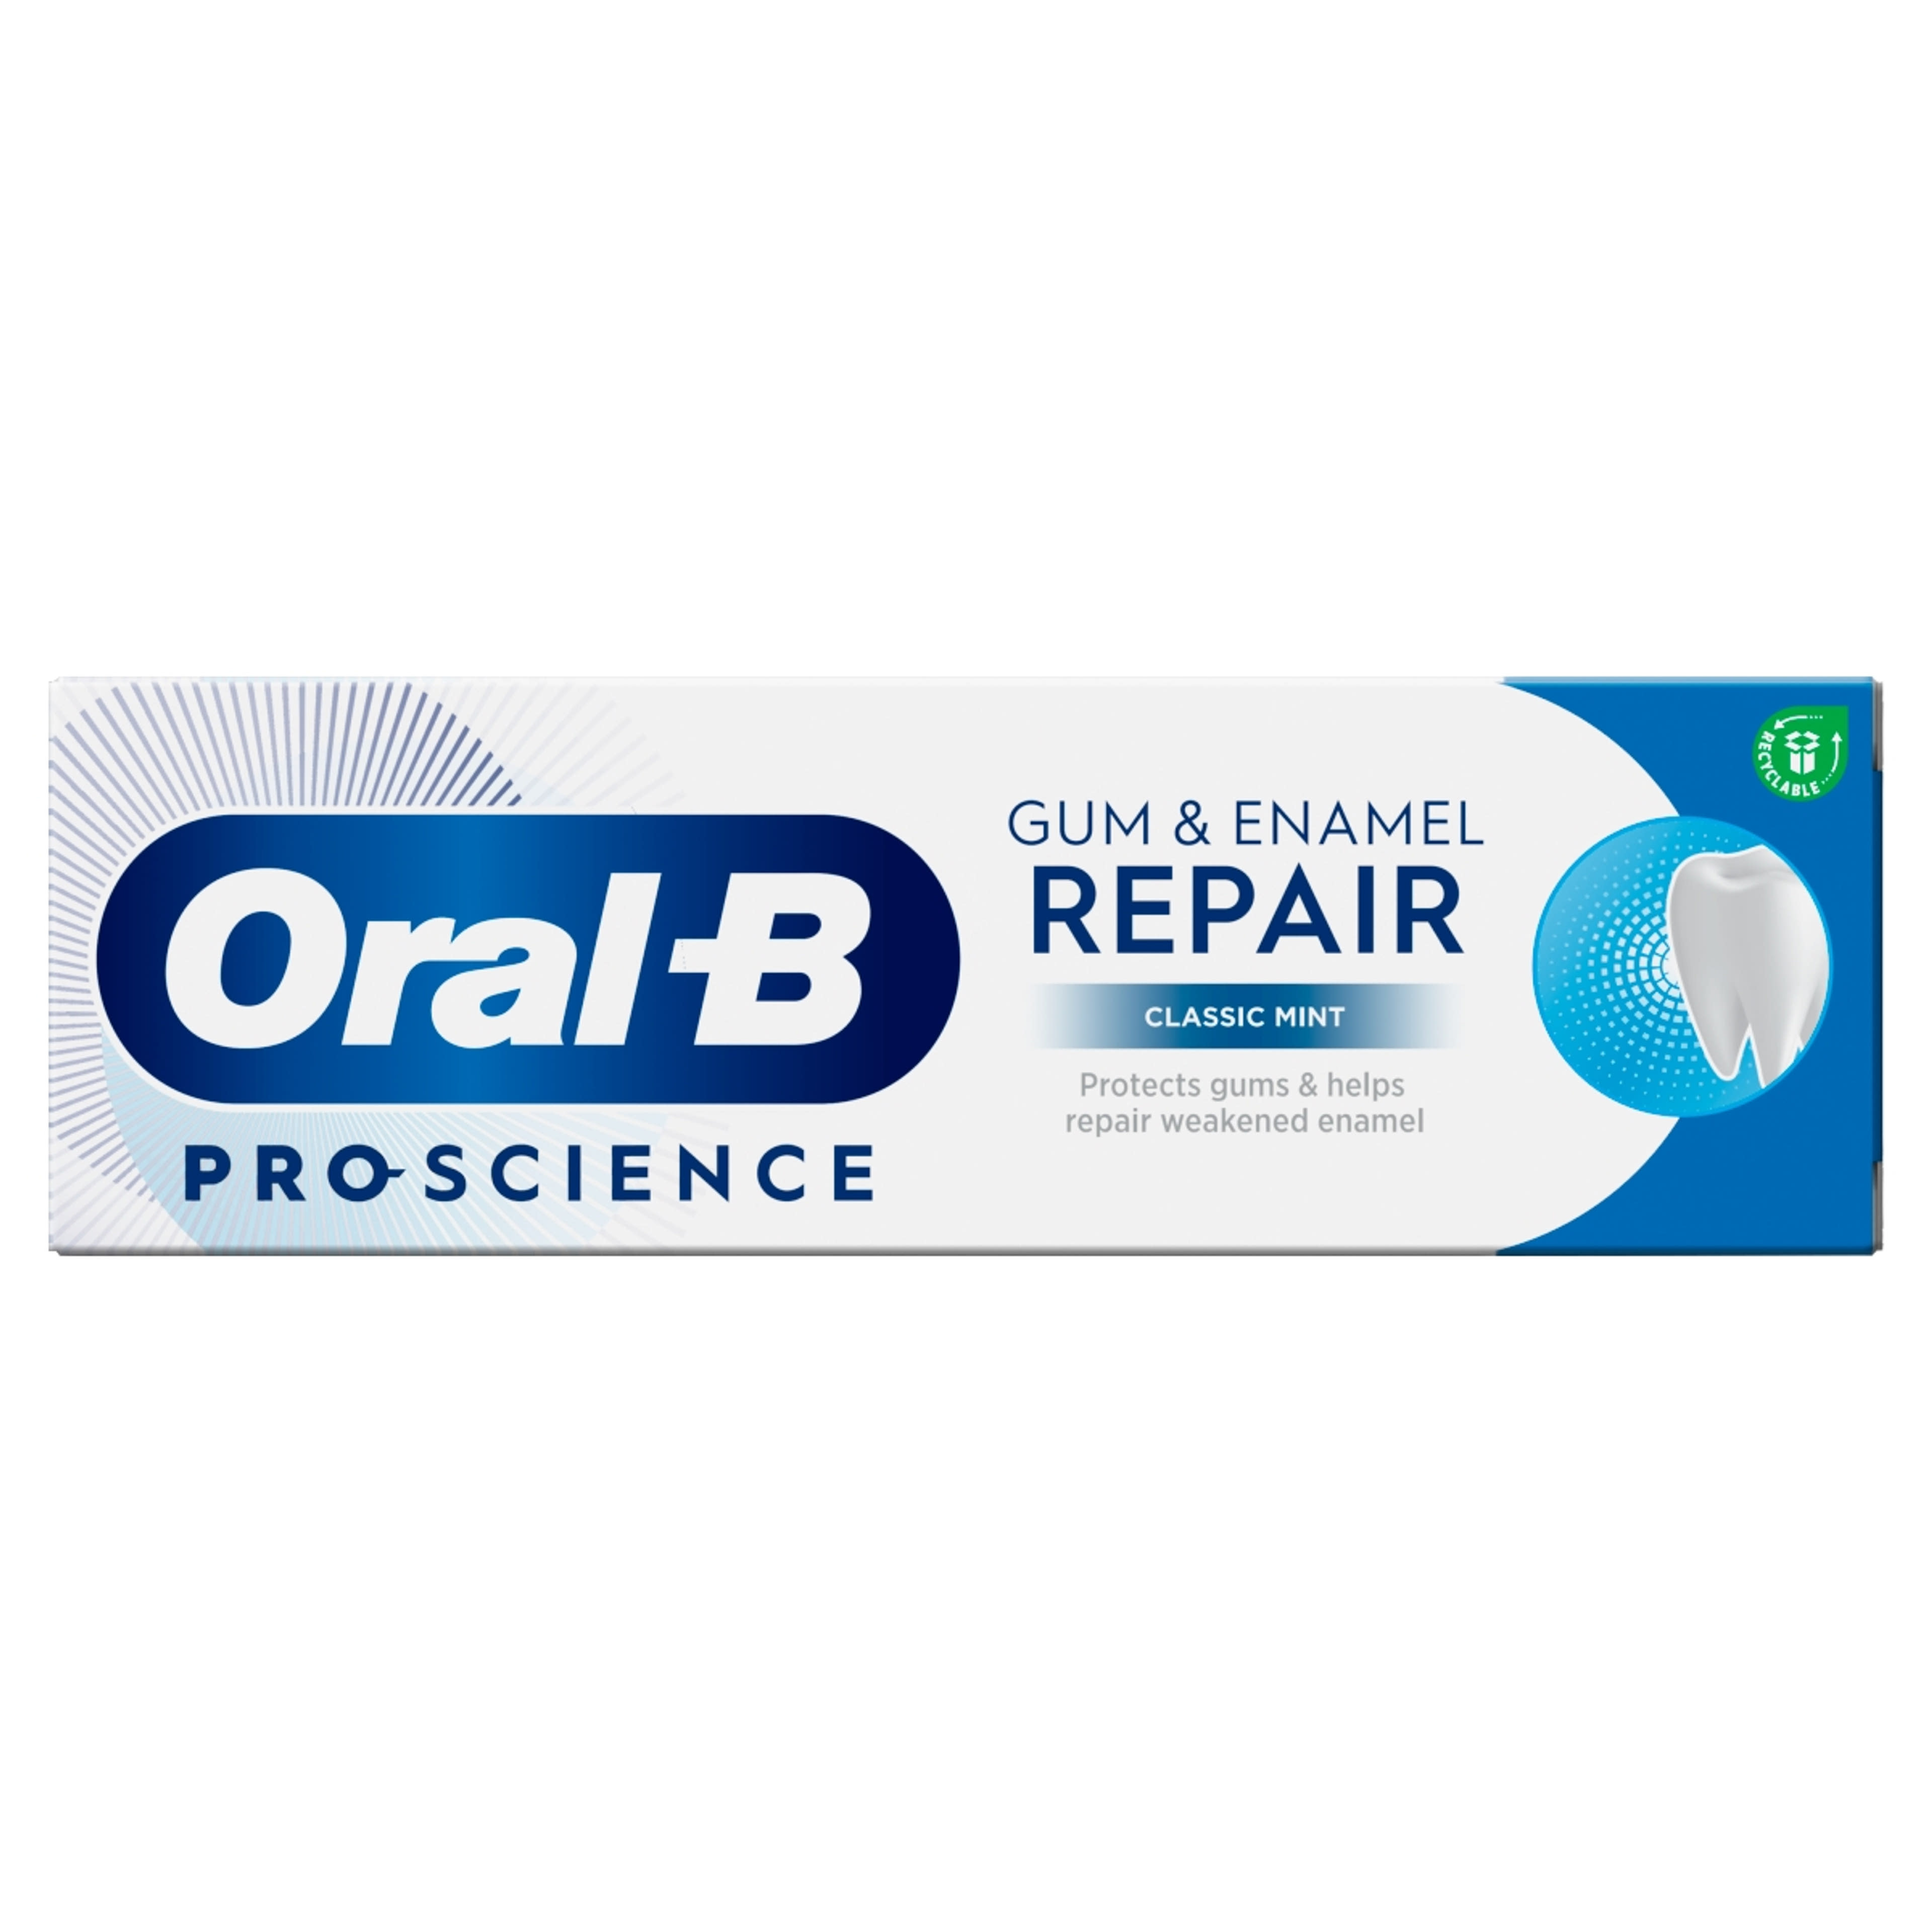 Oral-B Pro-Science Gum & Enamel Repair Original fogkrém - 75 ml-2